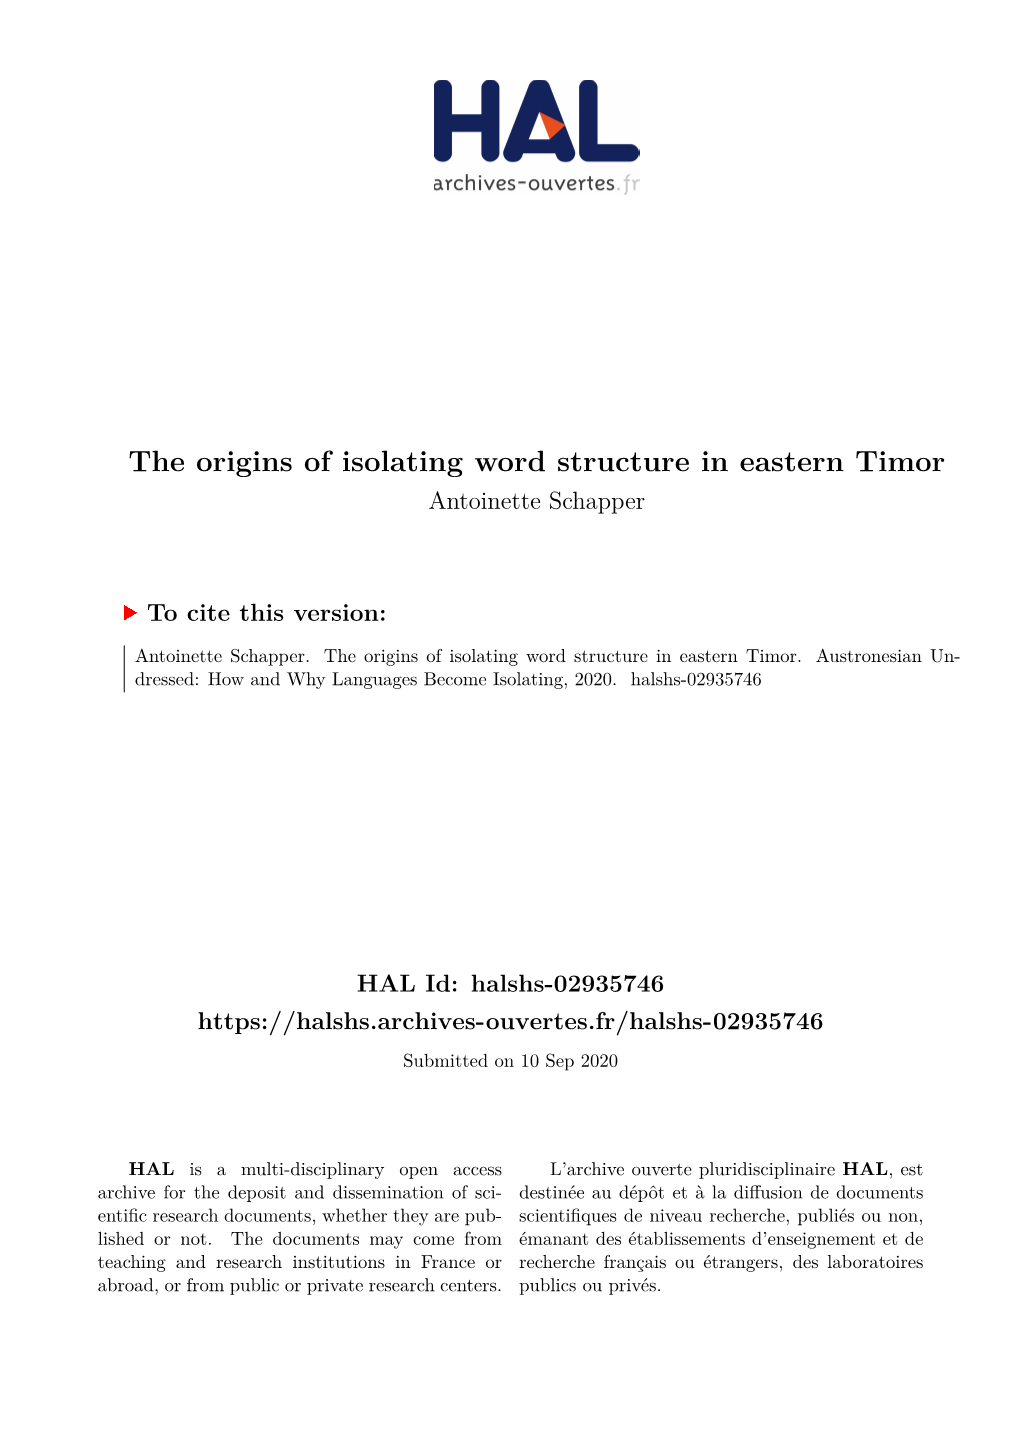 The Origins of Isolating Word Structure in Eastern Timor Antoinette Schapper